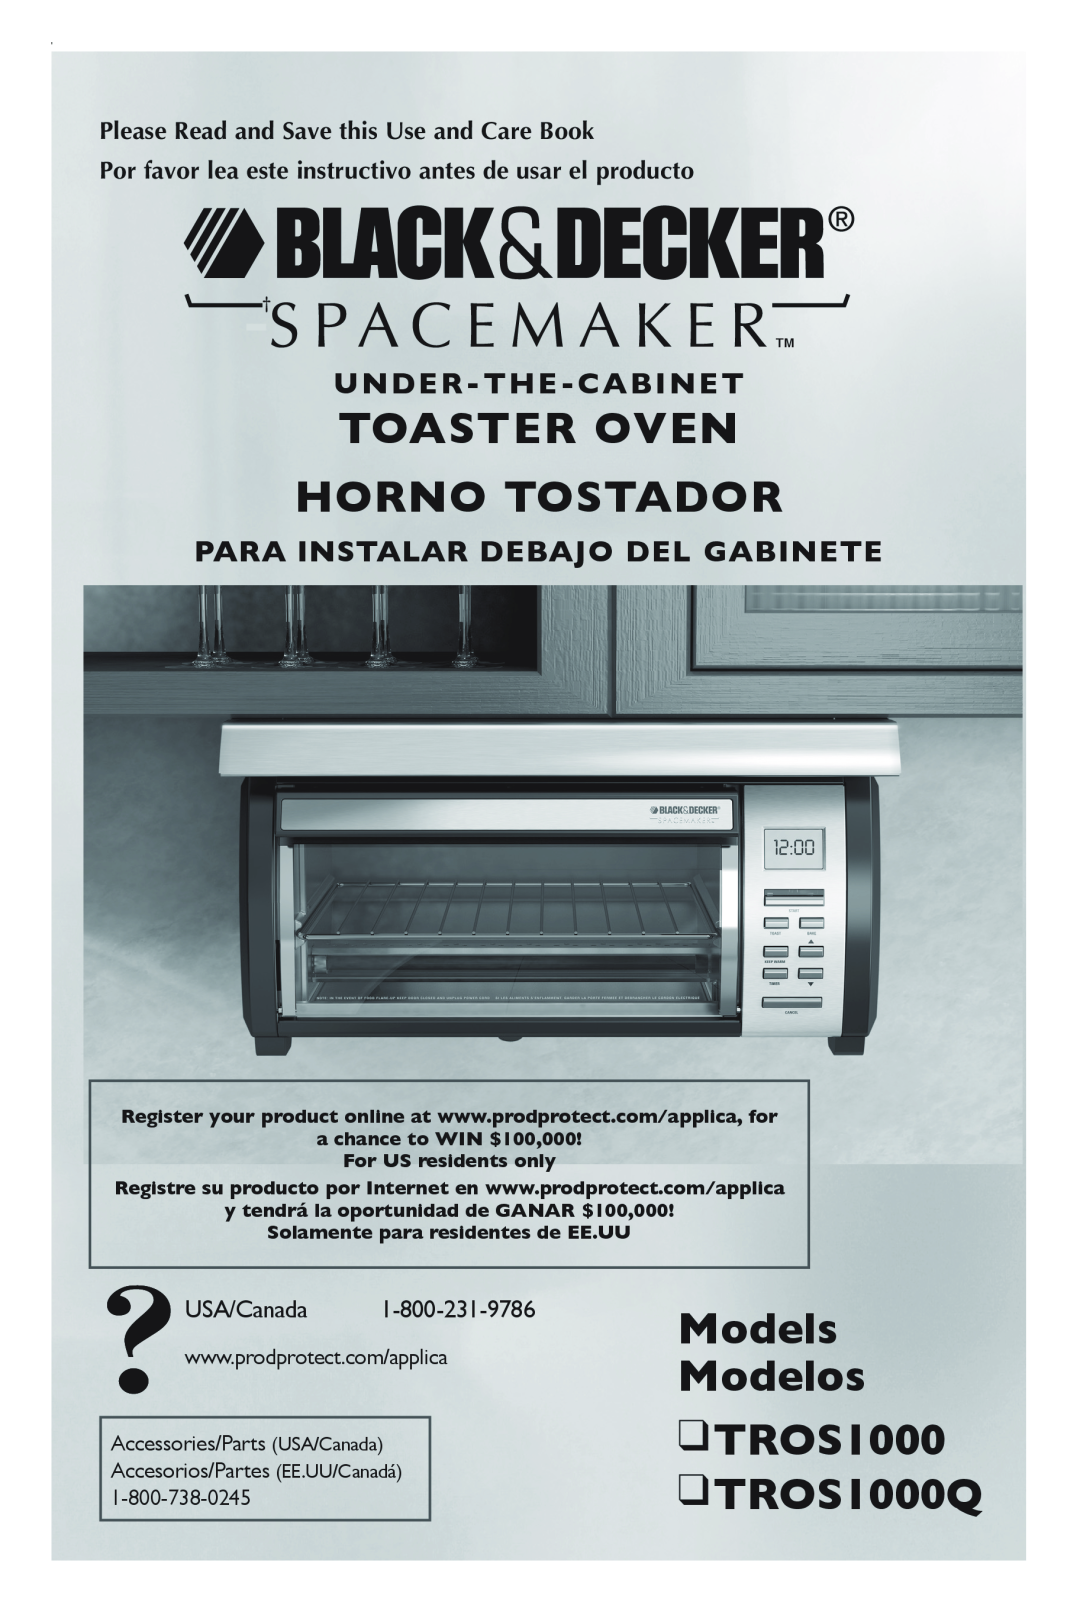 Black & Decker manual Toaster Oven Horno tostador, Models Modelos TROS1000 TROS1000Q, Under-The-Cabinet 